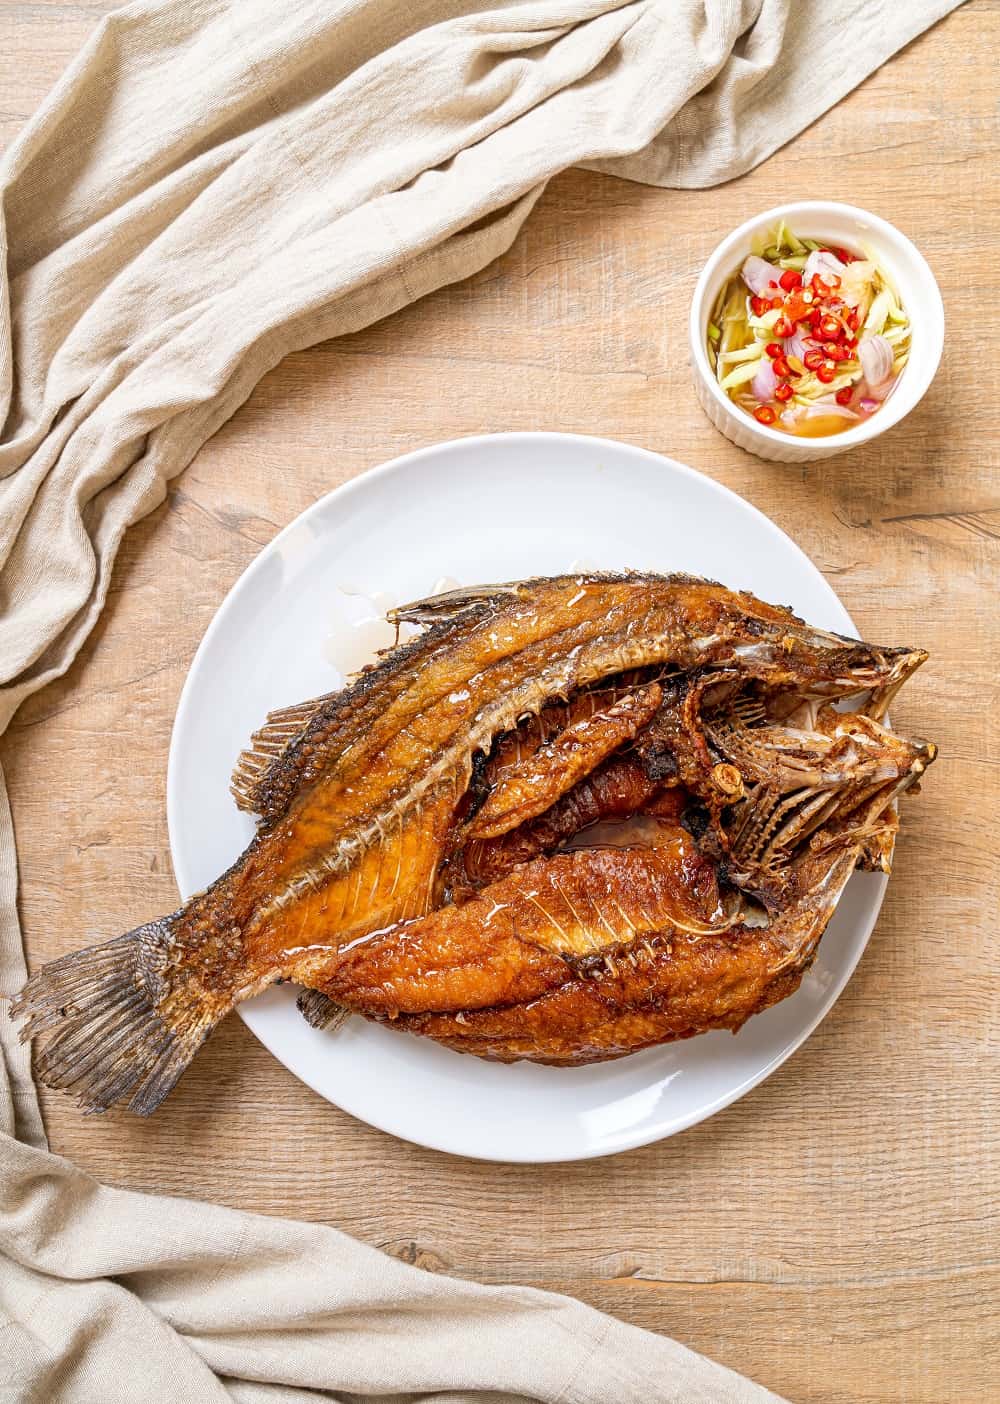 4 Ways To Reheat Fried Fish